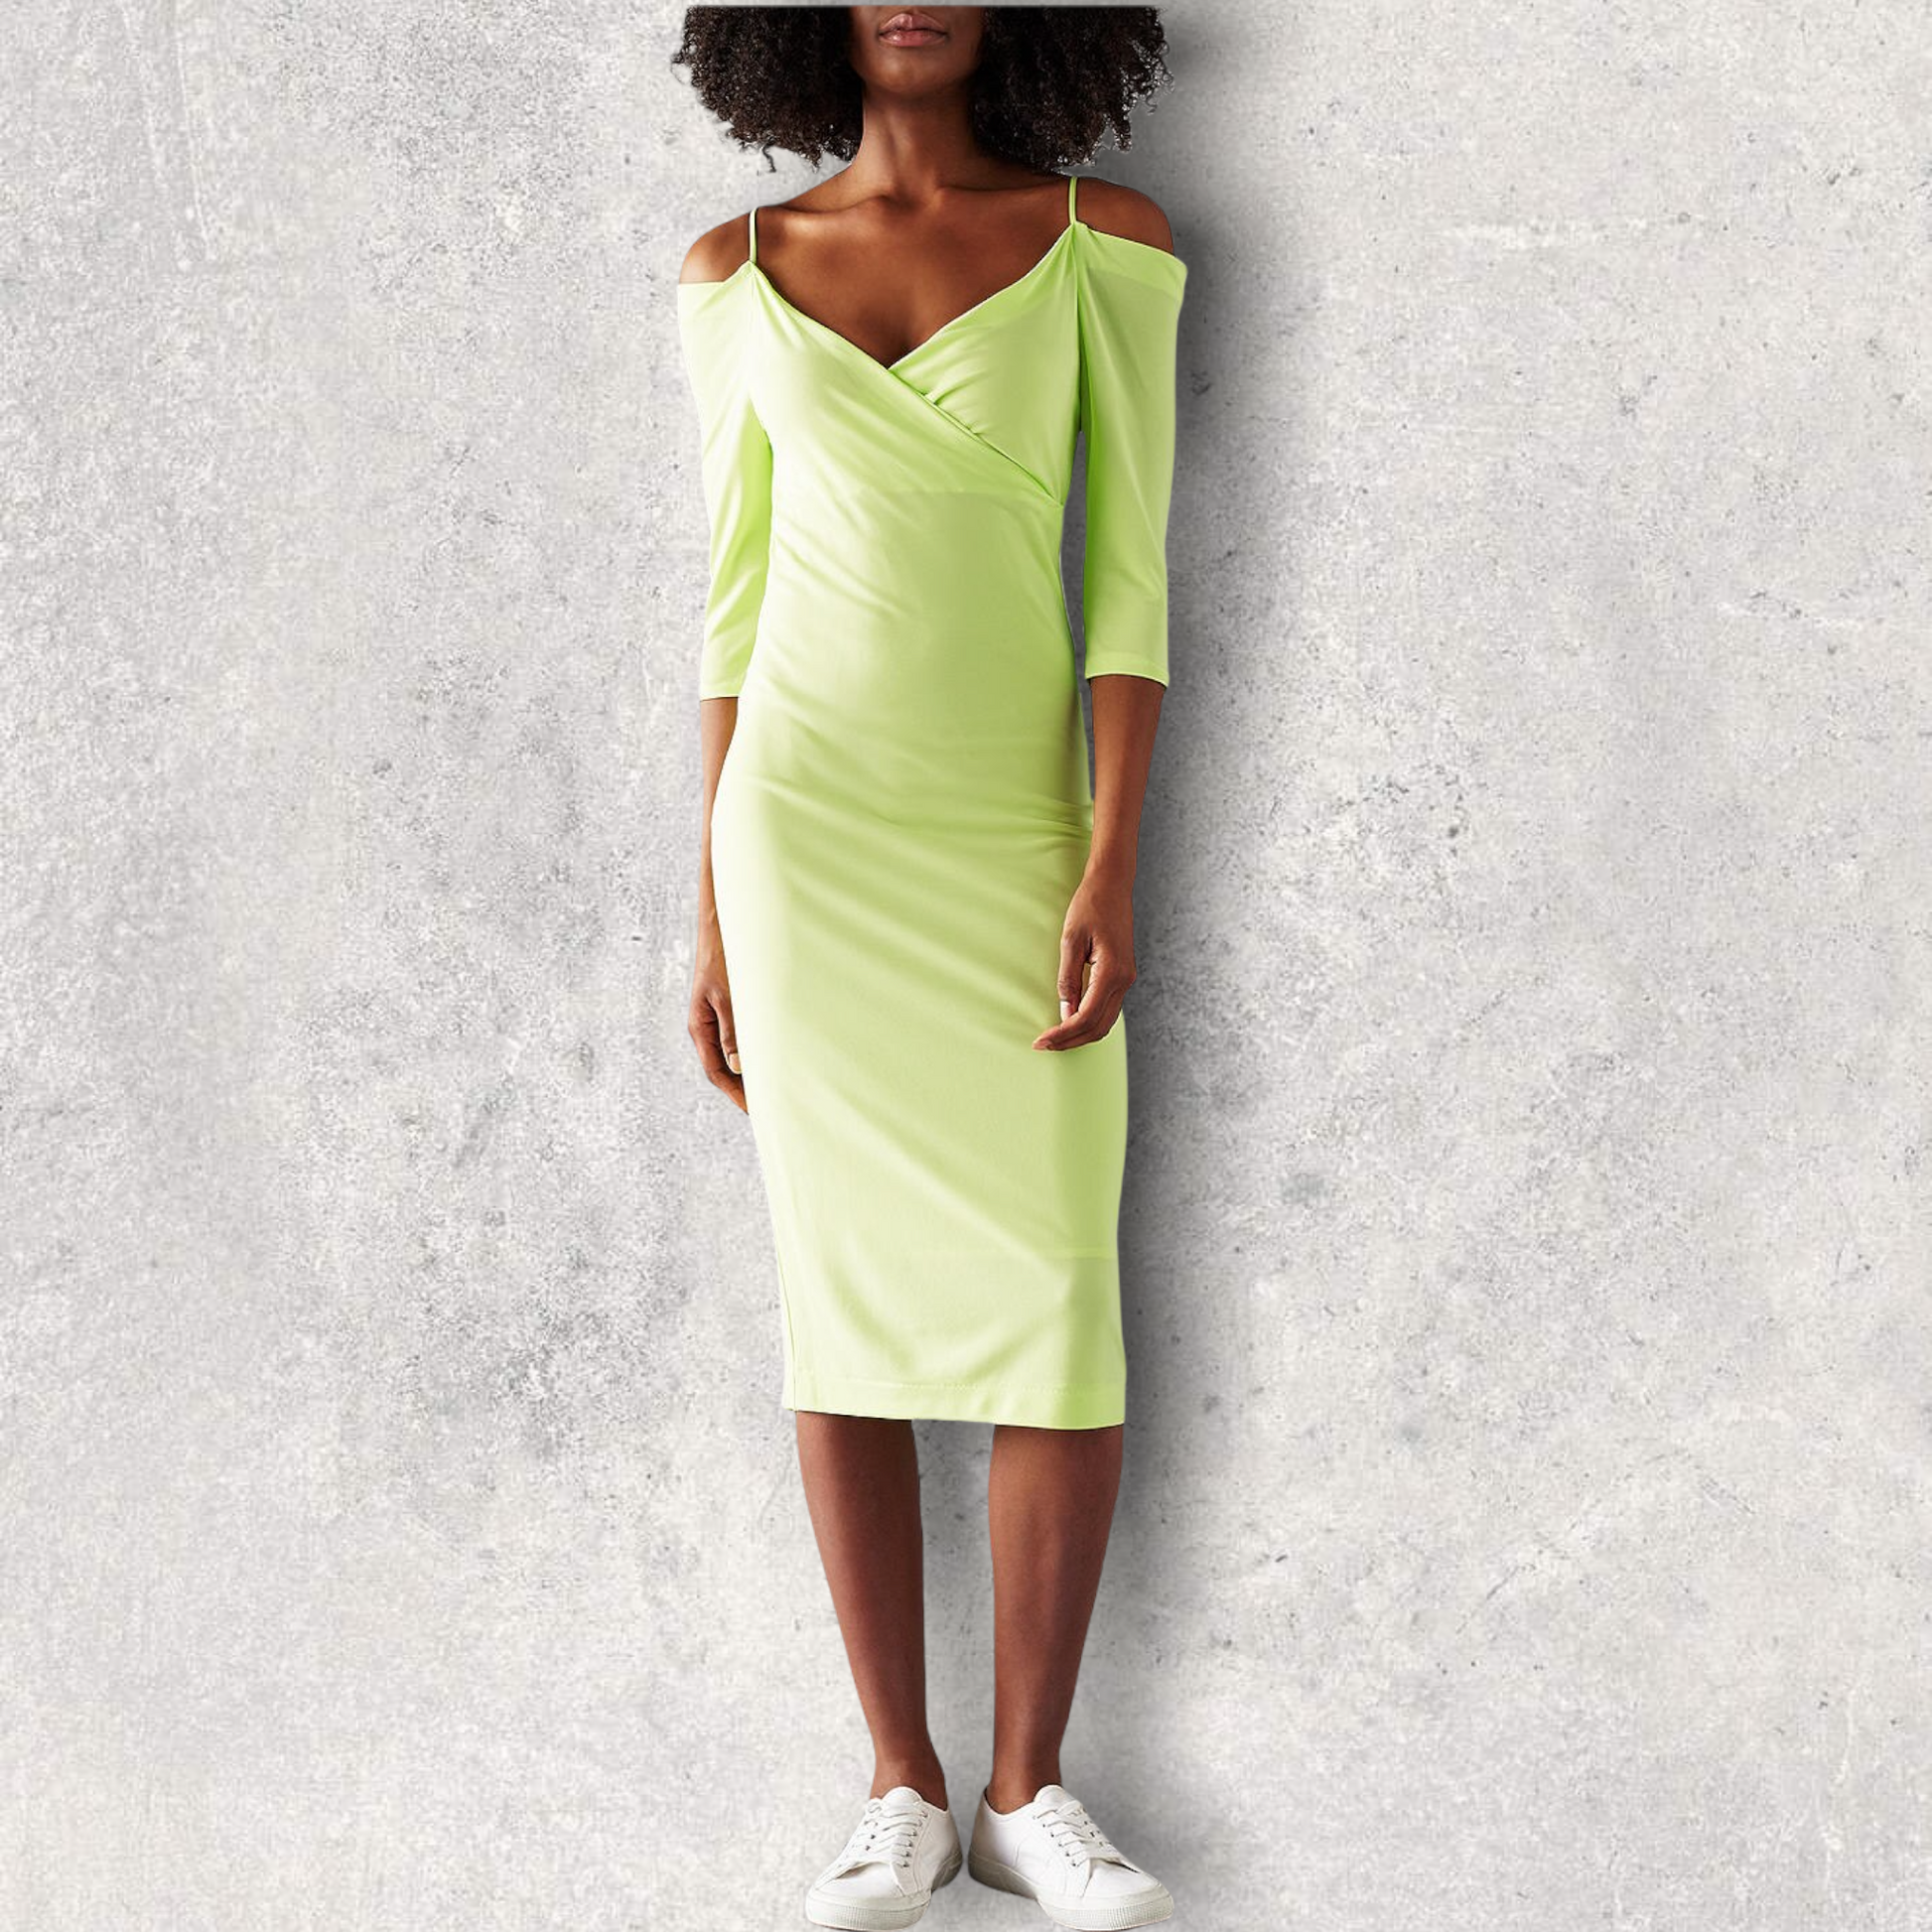 St Studio Womens Lime Off Shoulder Strap Dress Size M UK 8 US 4 EU 36 RRP £99 Timeless Fashions